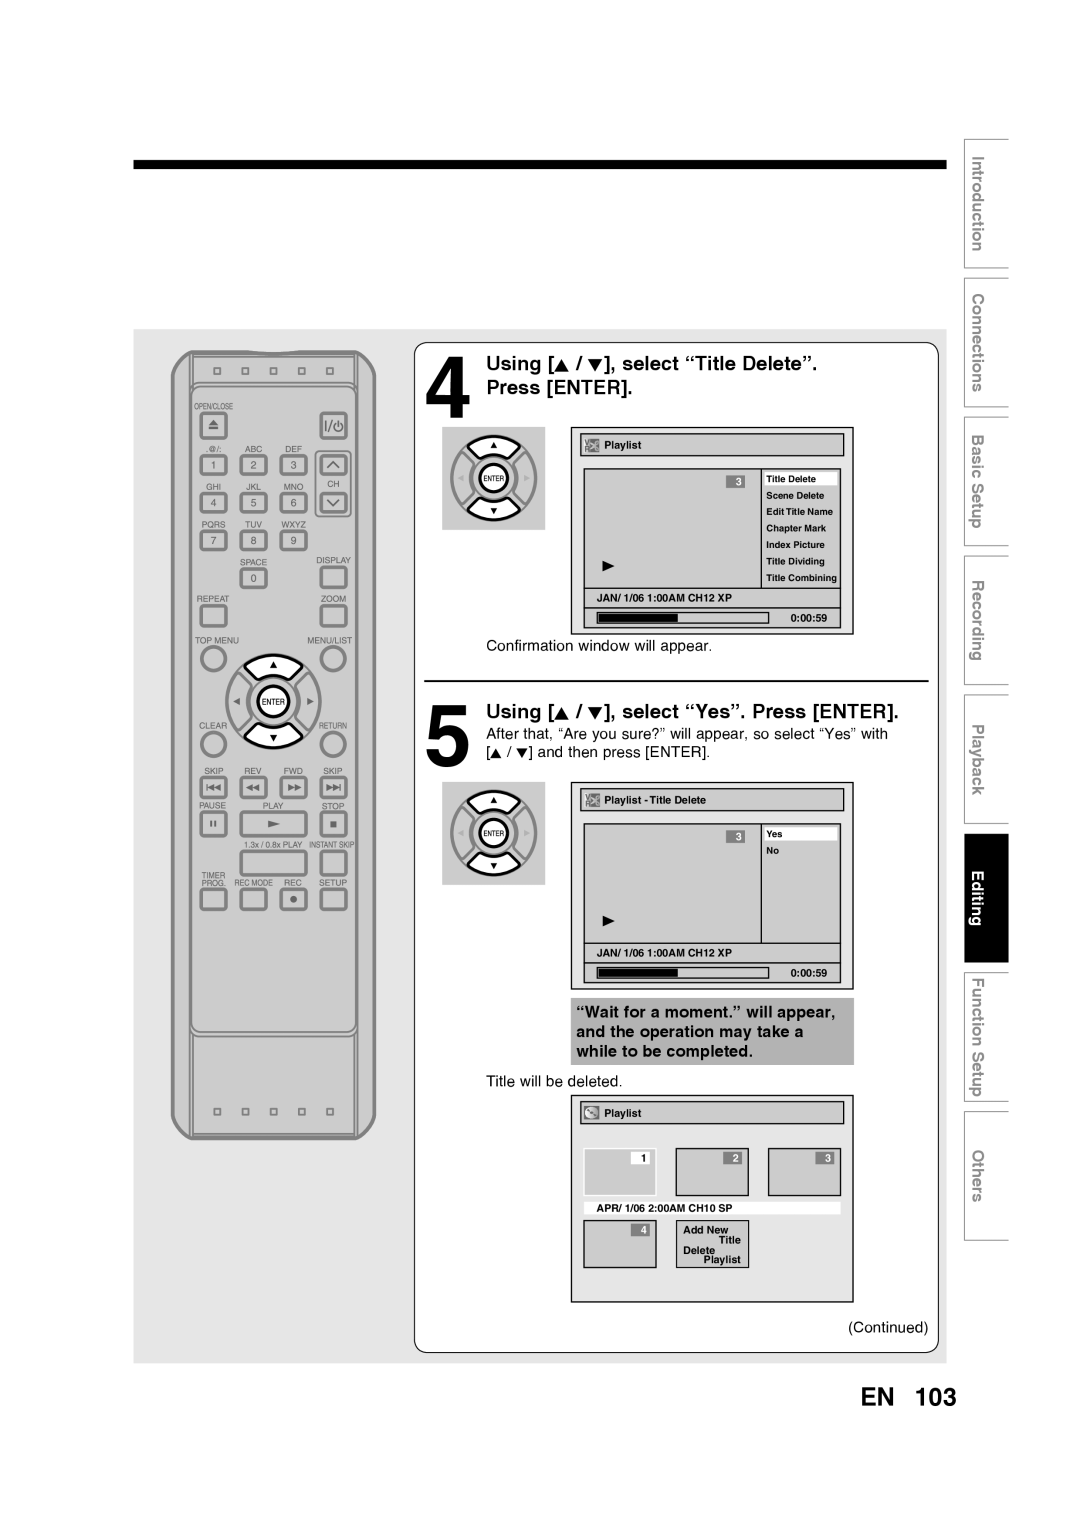 Toshiba D-RW2SU/D-RW2SC Using K / L, select “Title Delete” Press ENTER, Using K / L, select “Yes”. Press ENTER, Playlist 